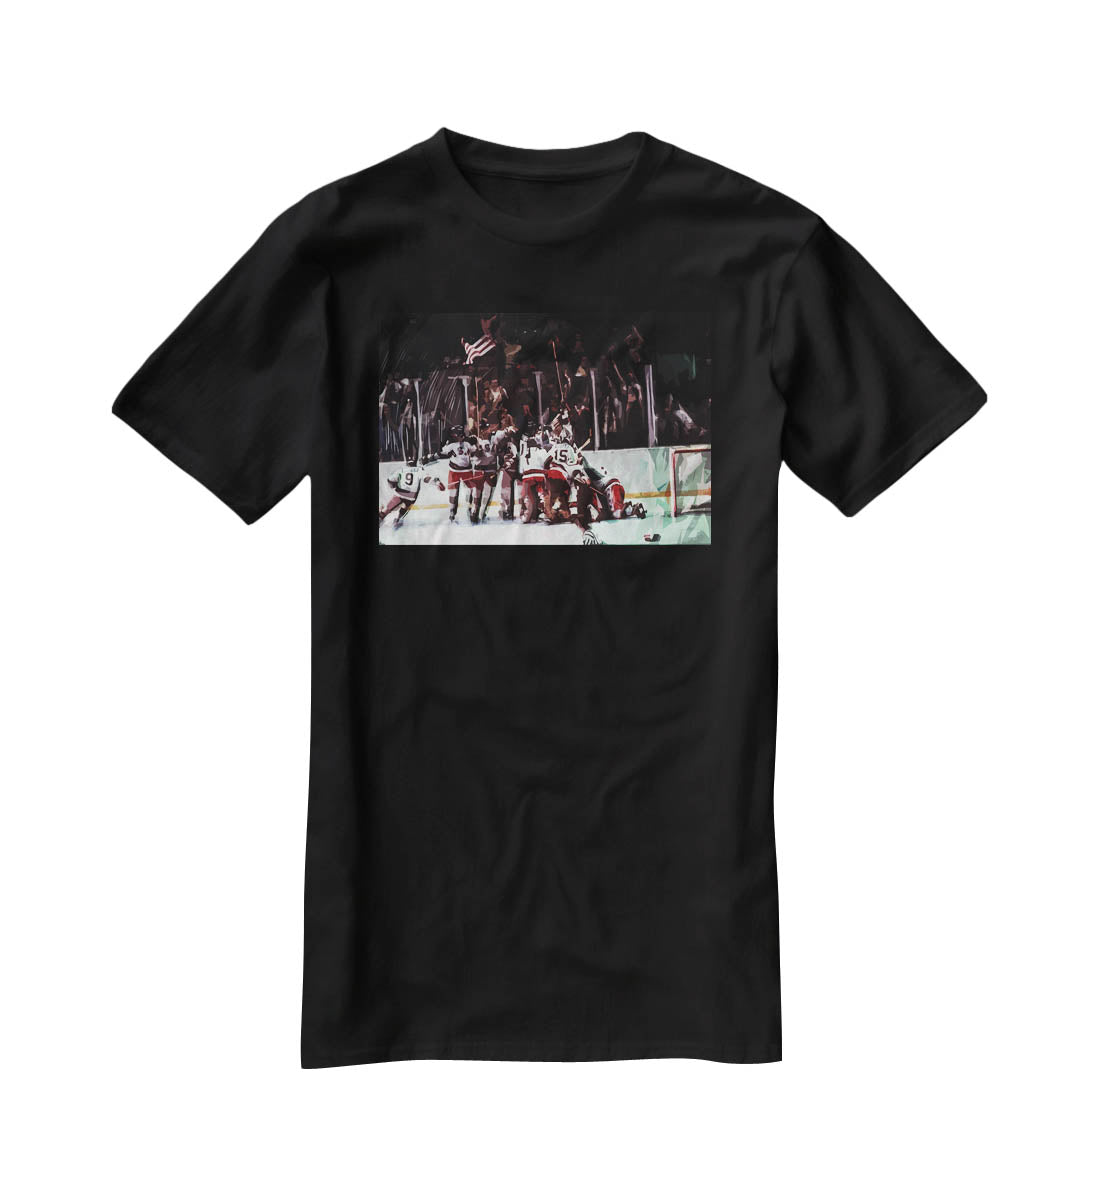 Miracle on Ice USA Ice Hockey Team T-Shirt